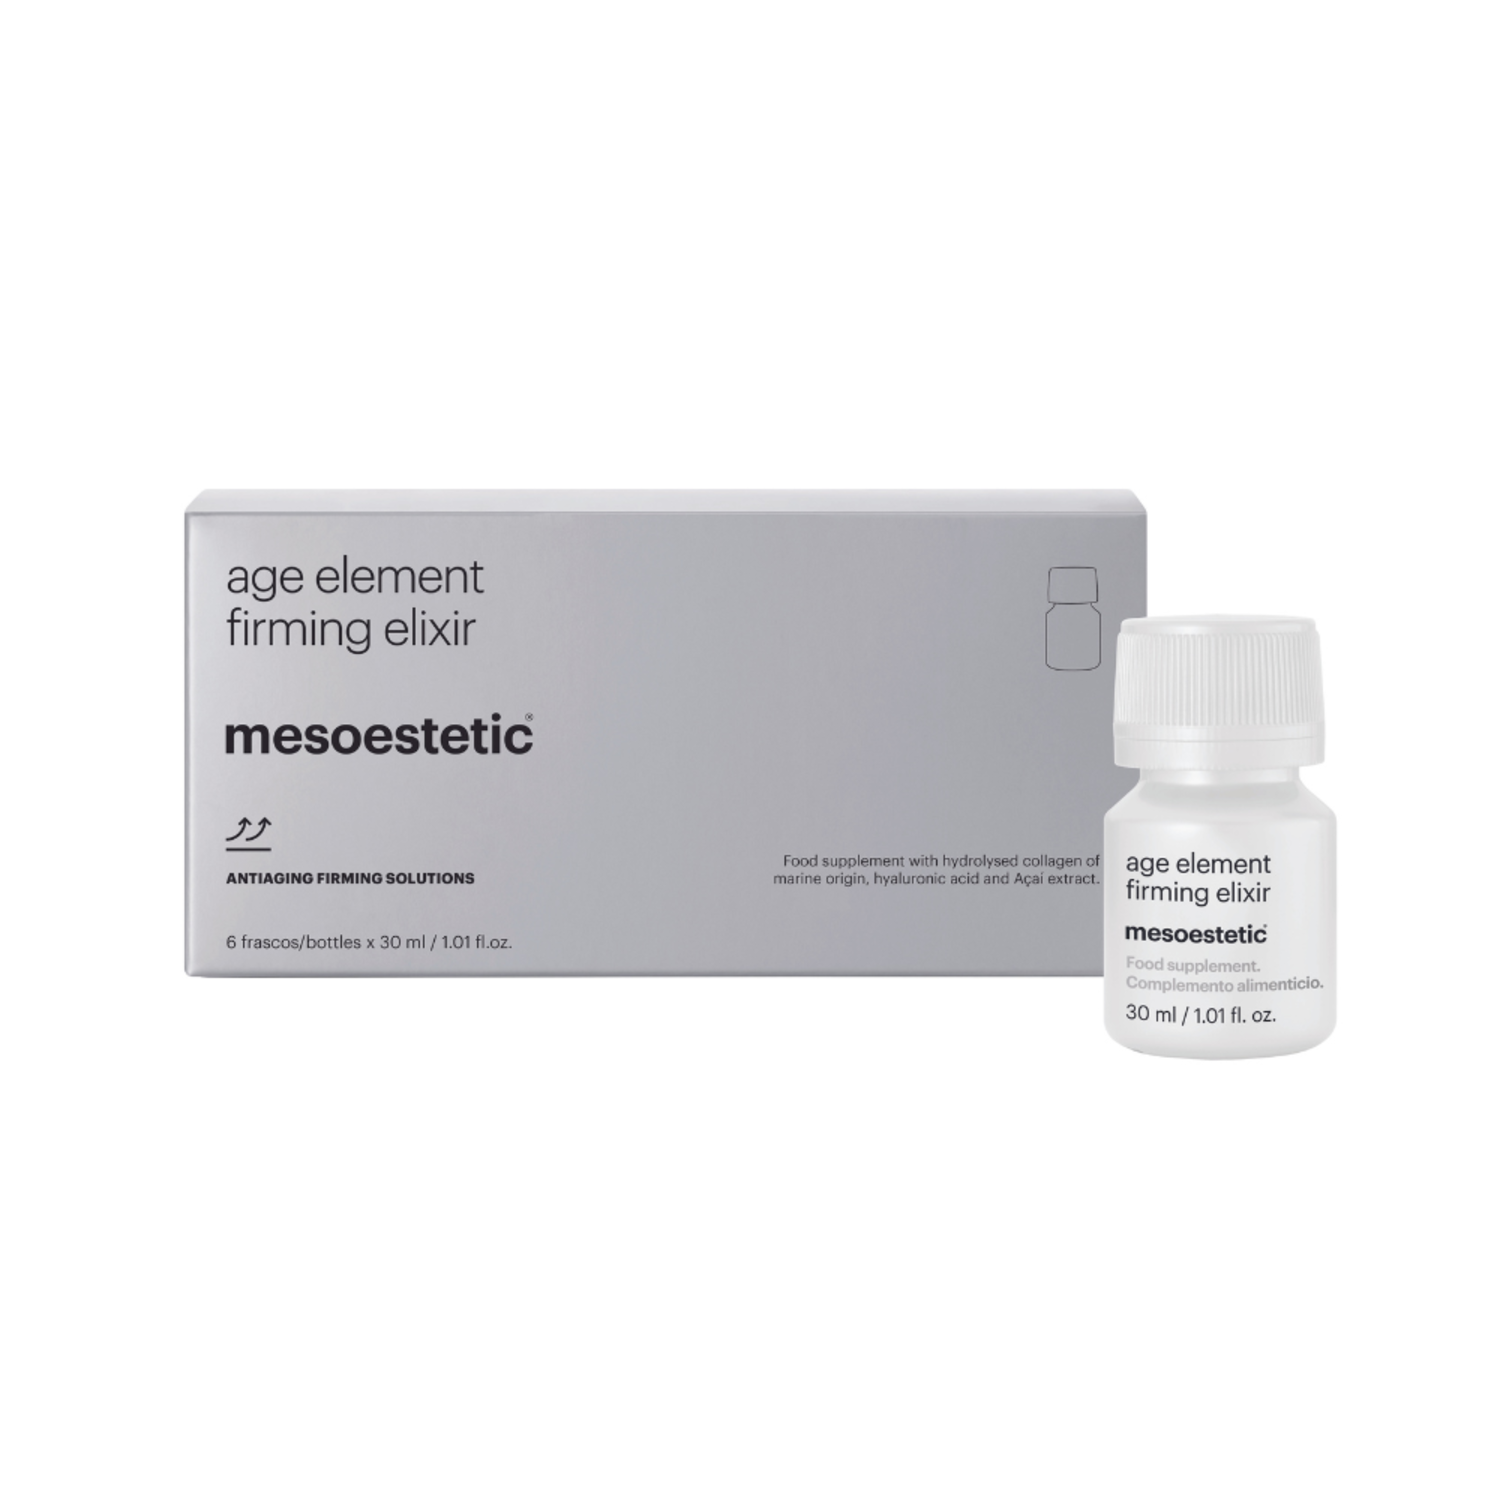 Mesoestetic Age element firming elixir - 6x30ml | Online bestellen - Apotheek en huid